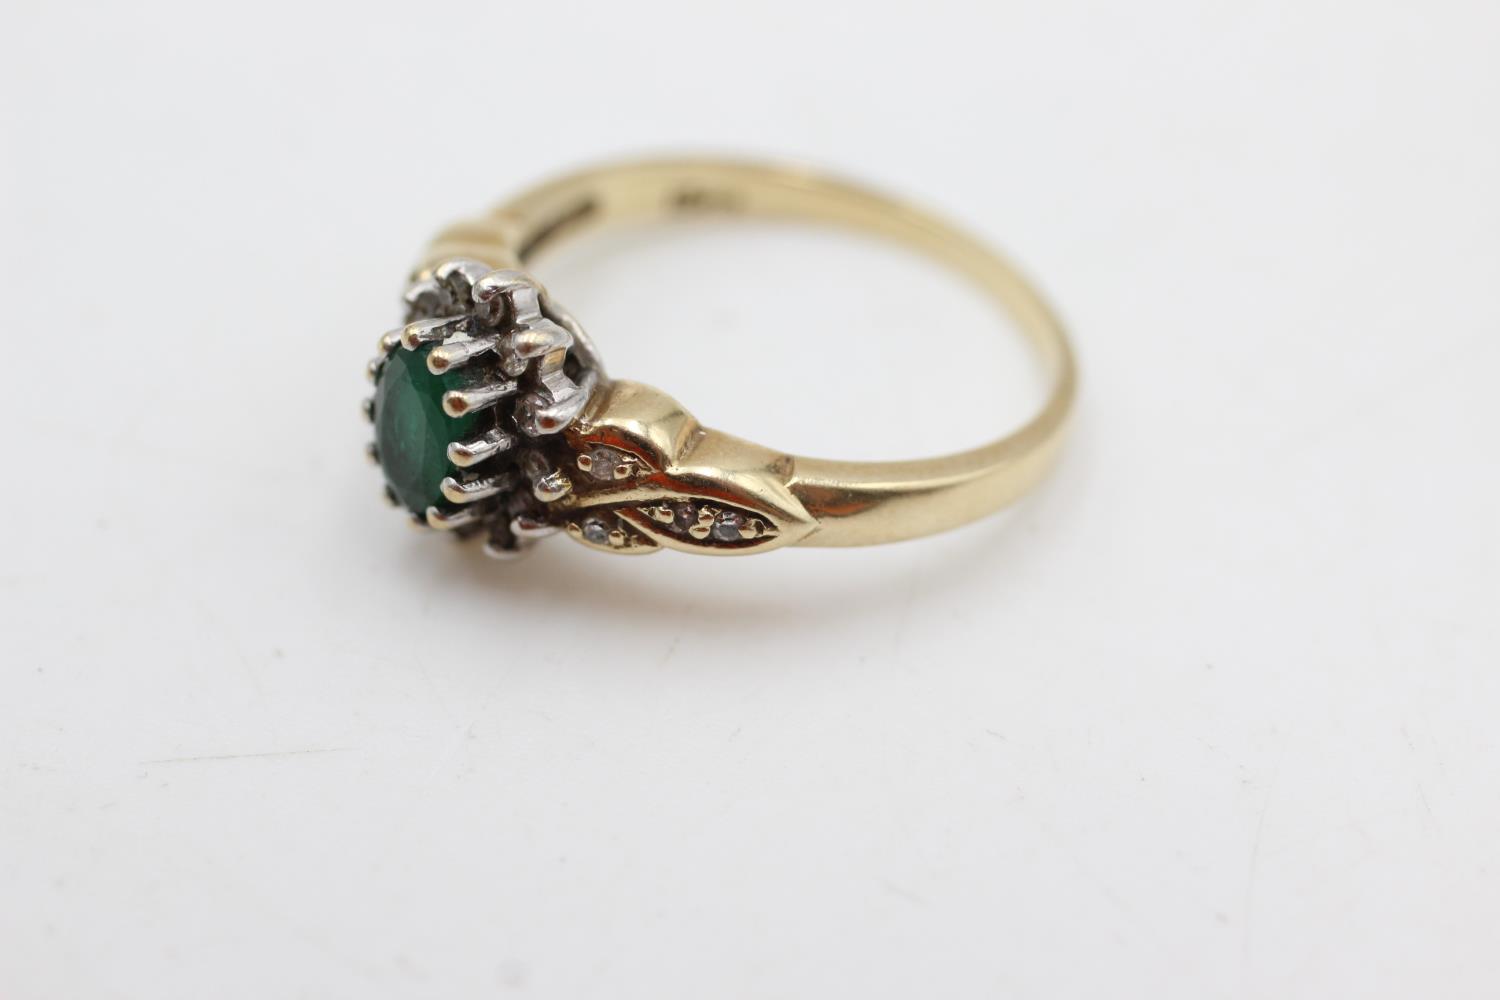 9ct gold vintage emerald & diamond dress ring (3.4g) sizer Q - Image 3 of 4